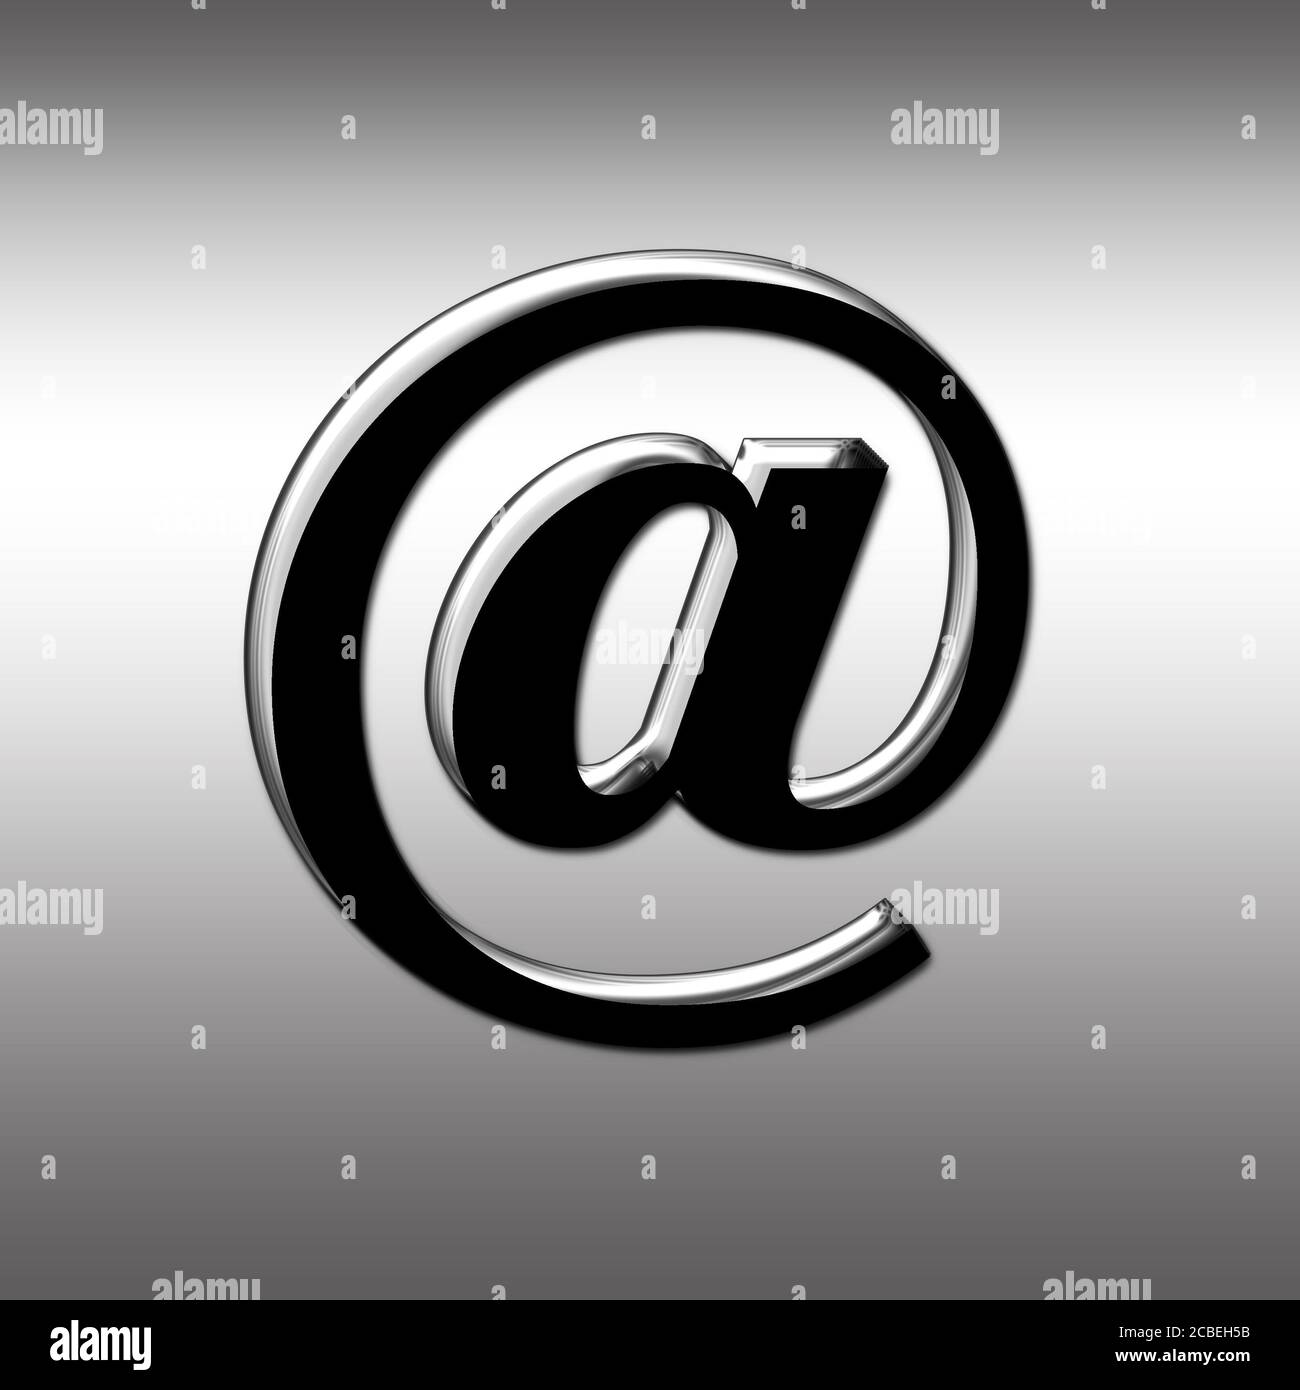 E-Mail logo Stock Photo